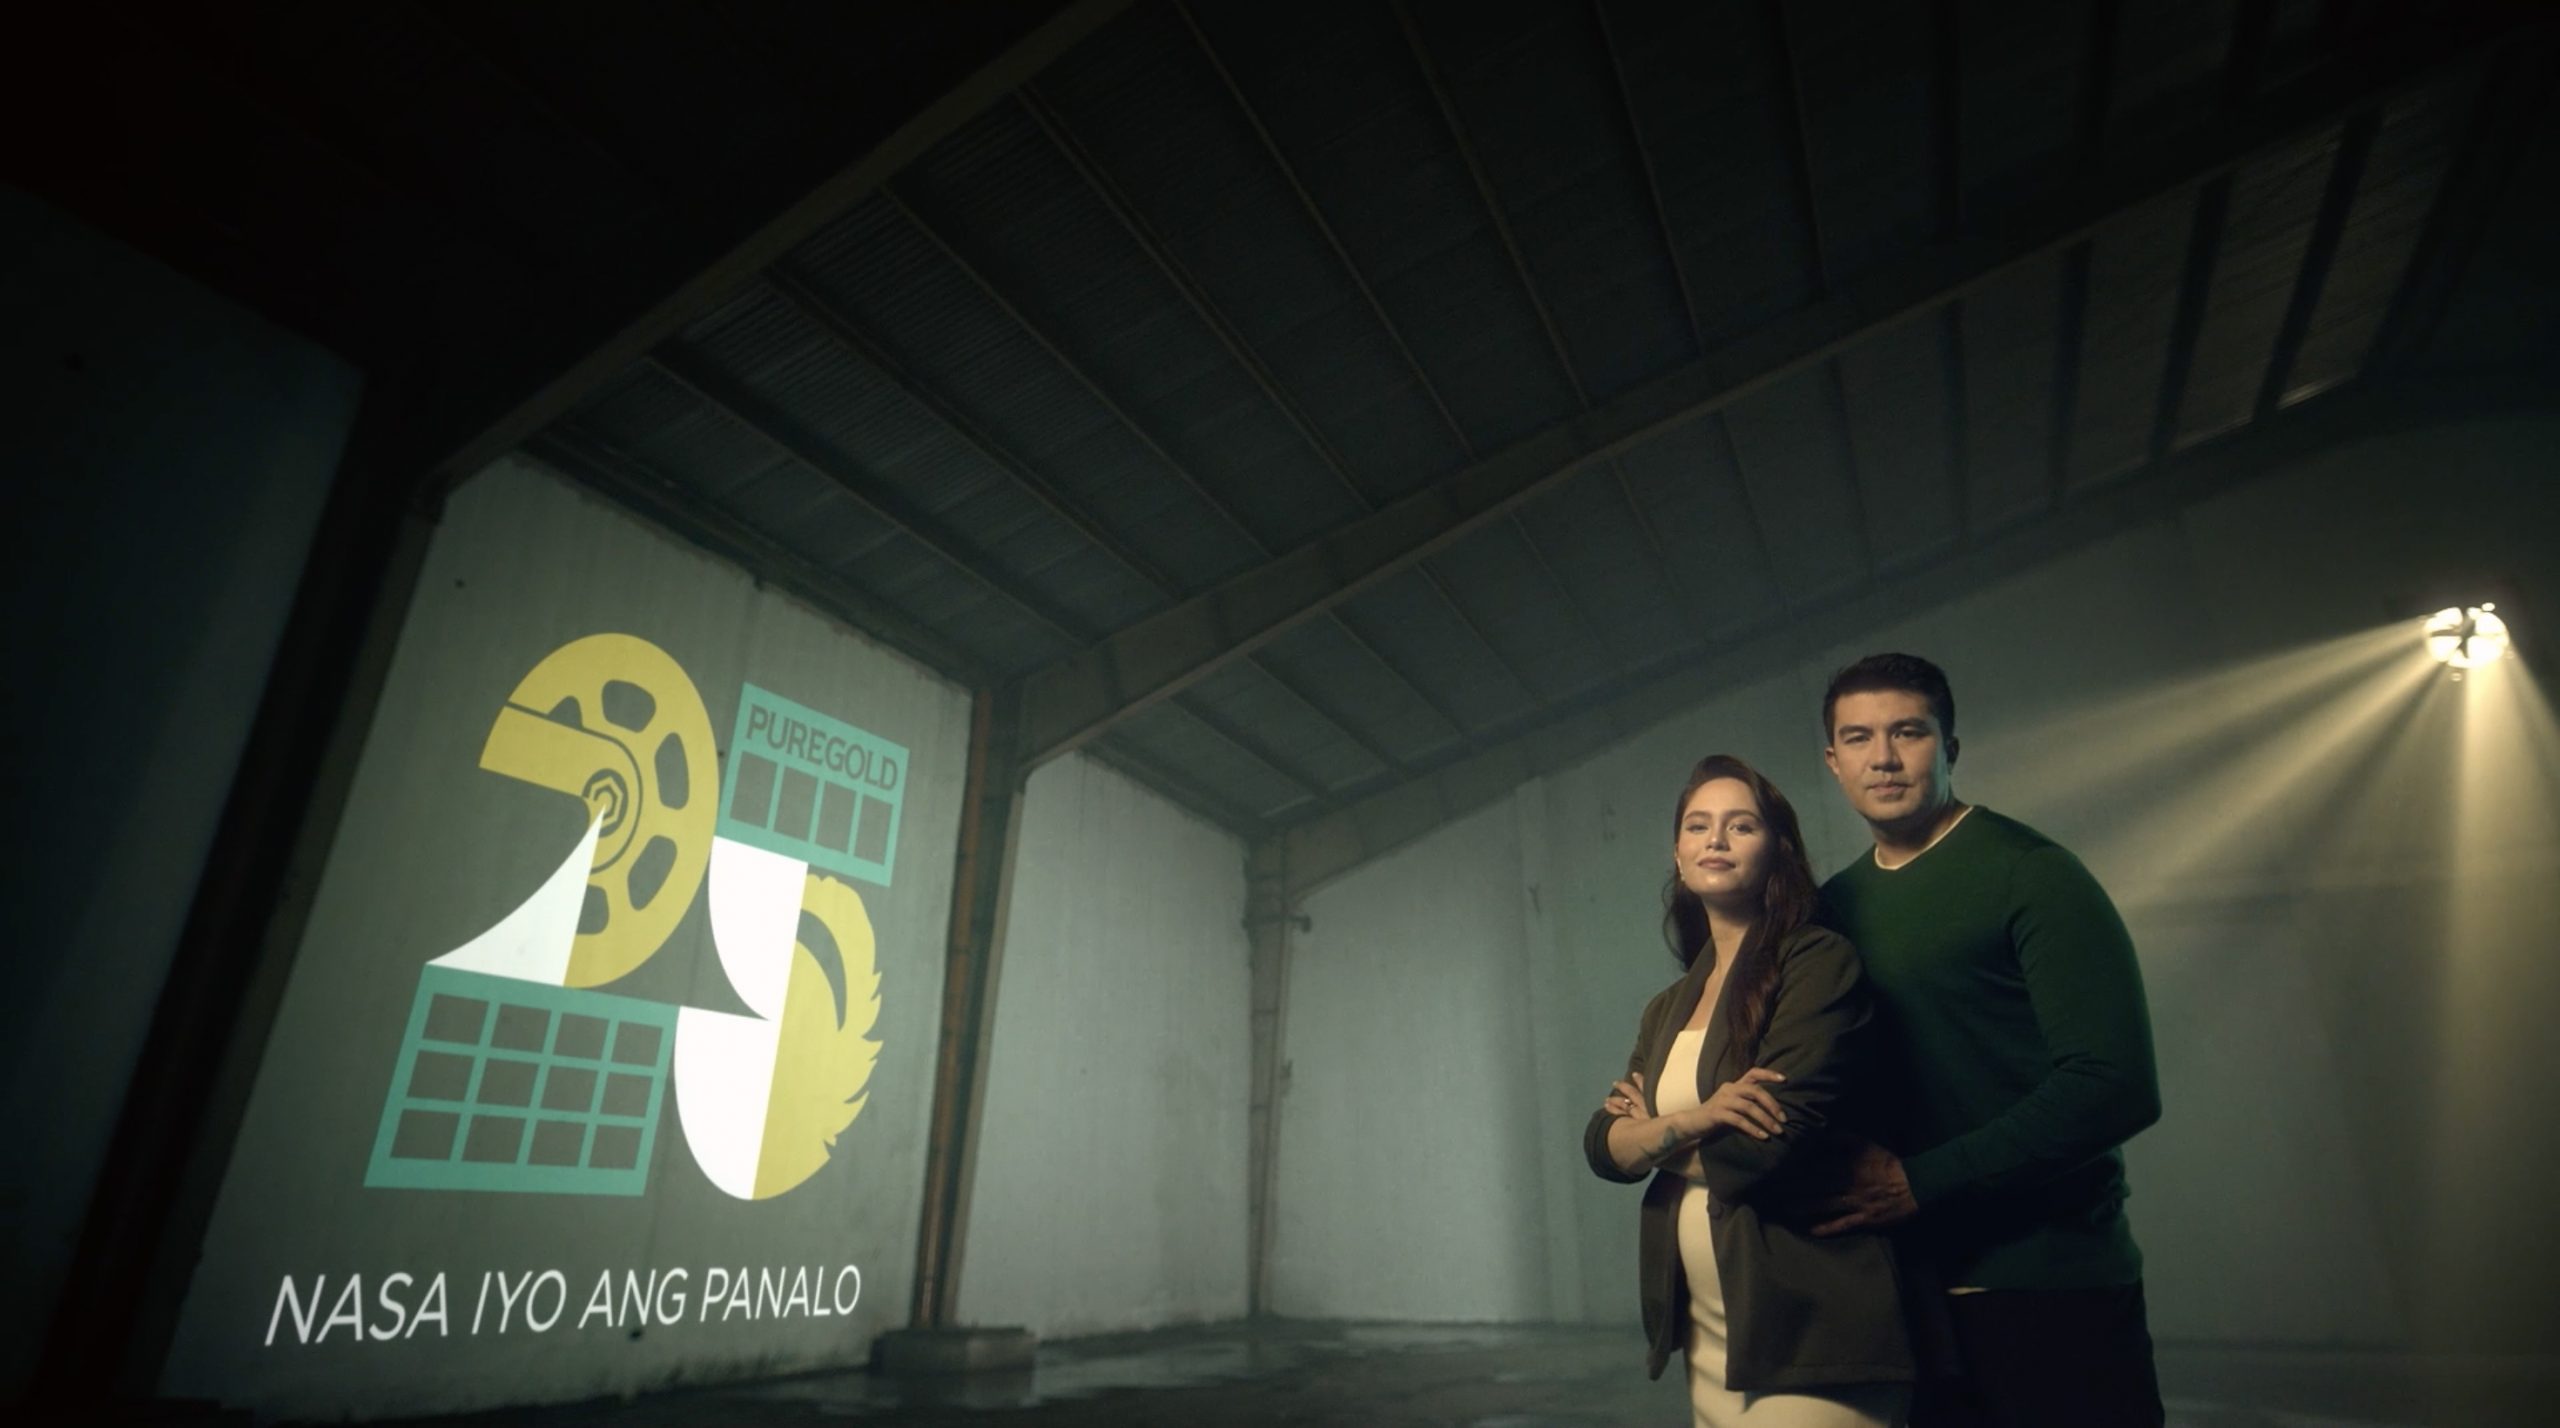 Puregold shines the spotlight on Filipino ‘winners’ and their success stories through “Nasa Iyo ang Panalo”